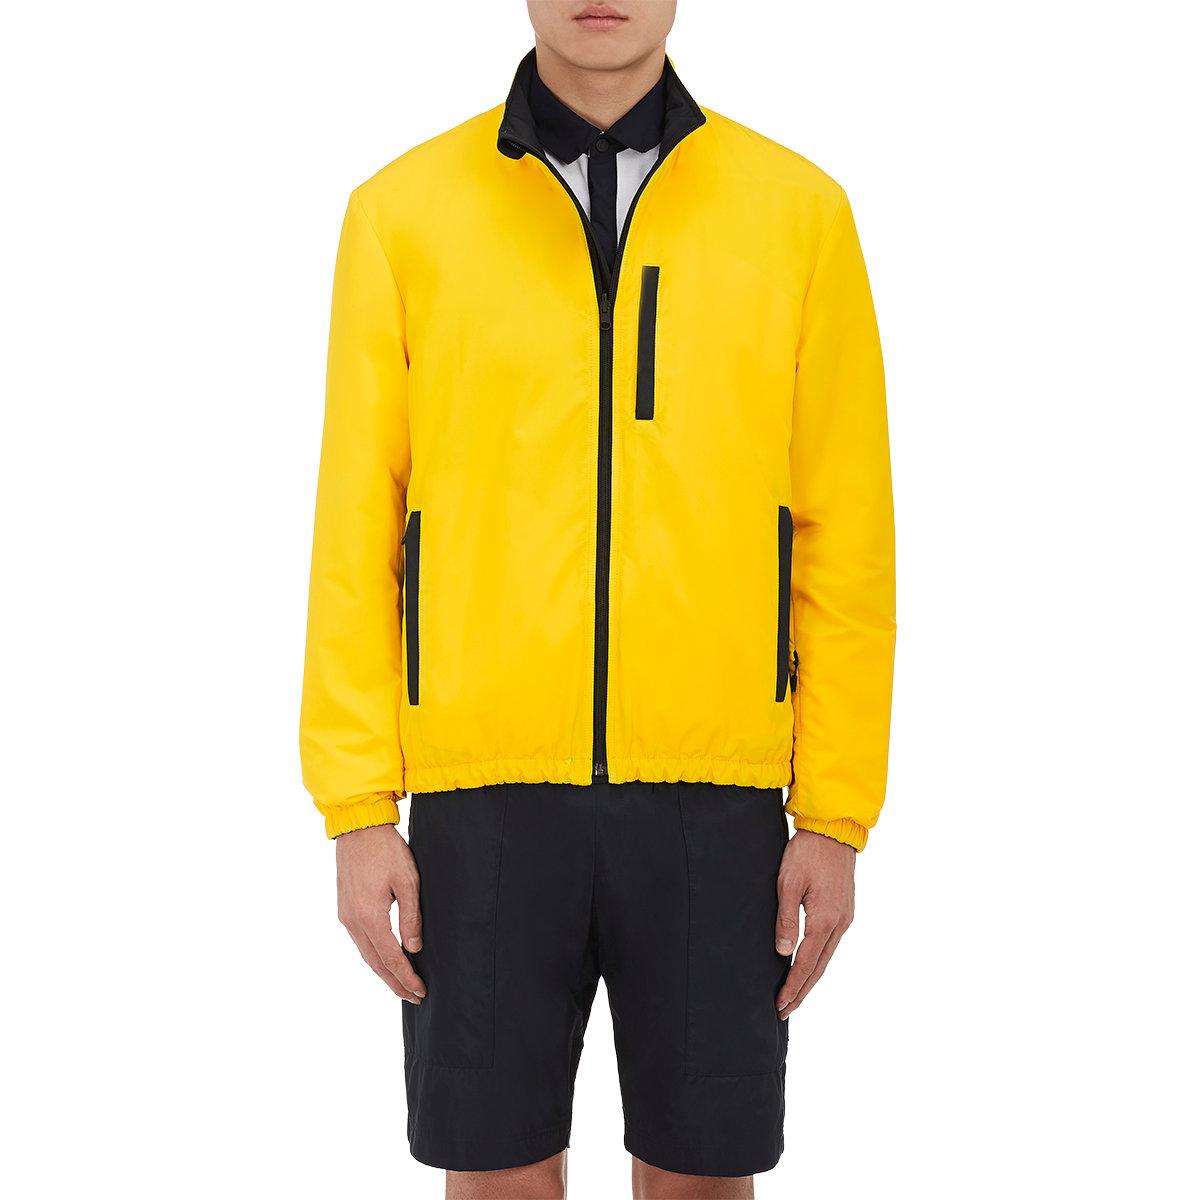 Aztech Mountain Reversible Jacket in Yellow for Men - Lyst